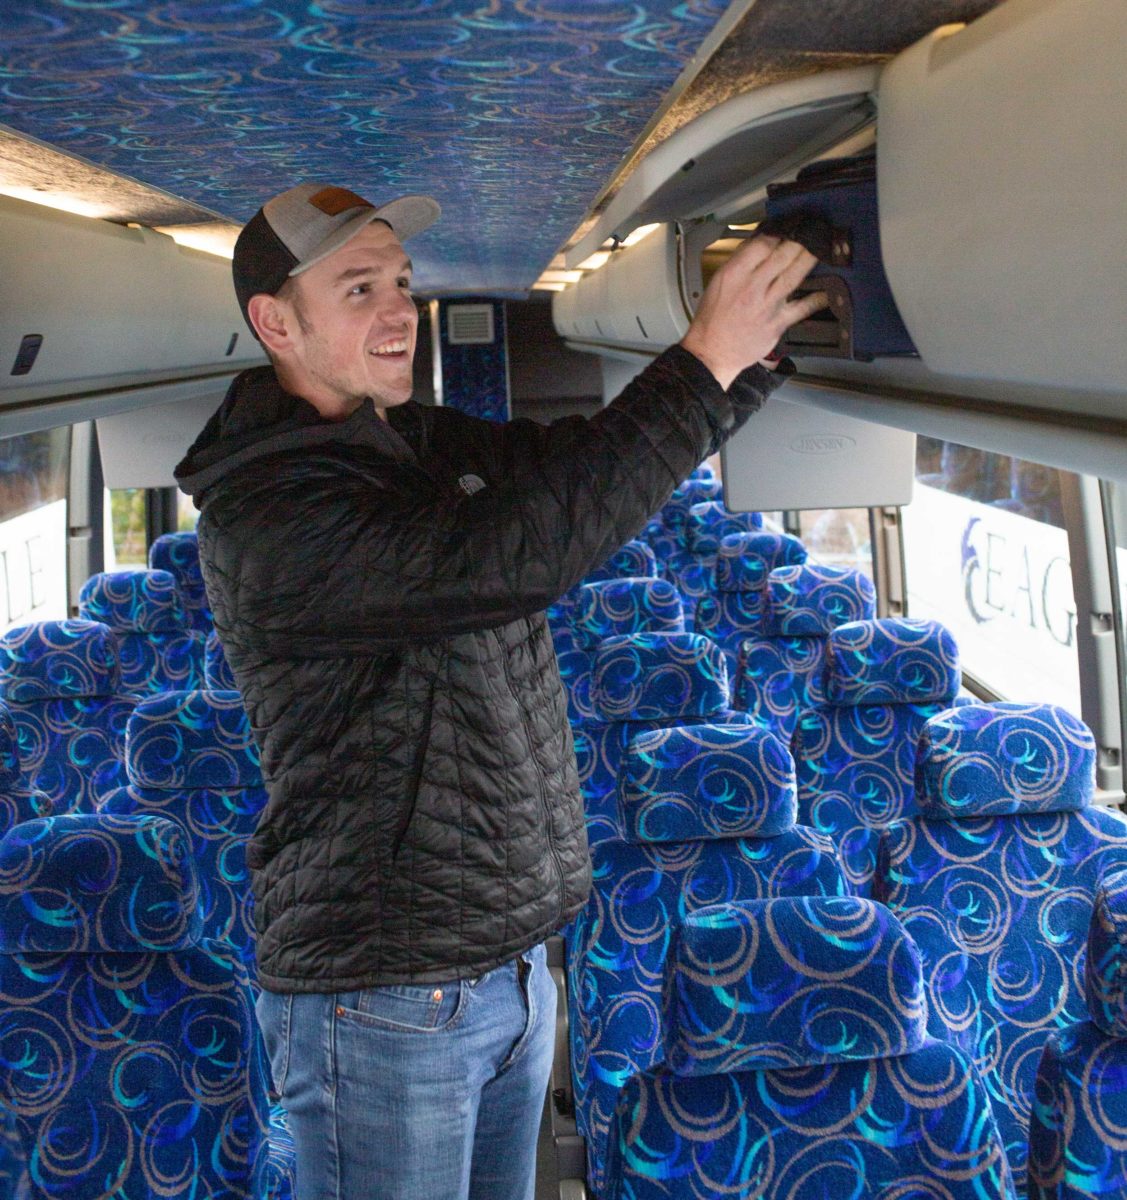 A man puts a bag in an overhead bin on a bus